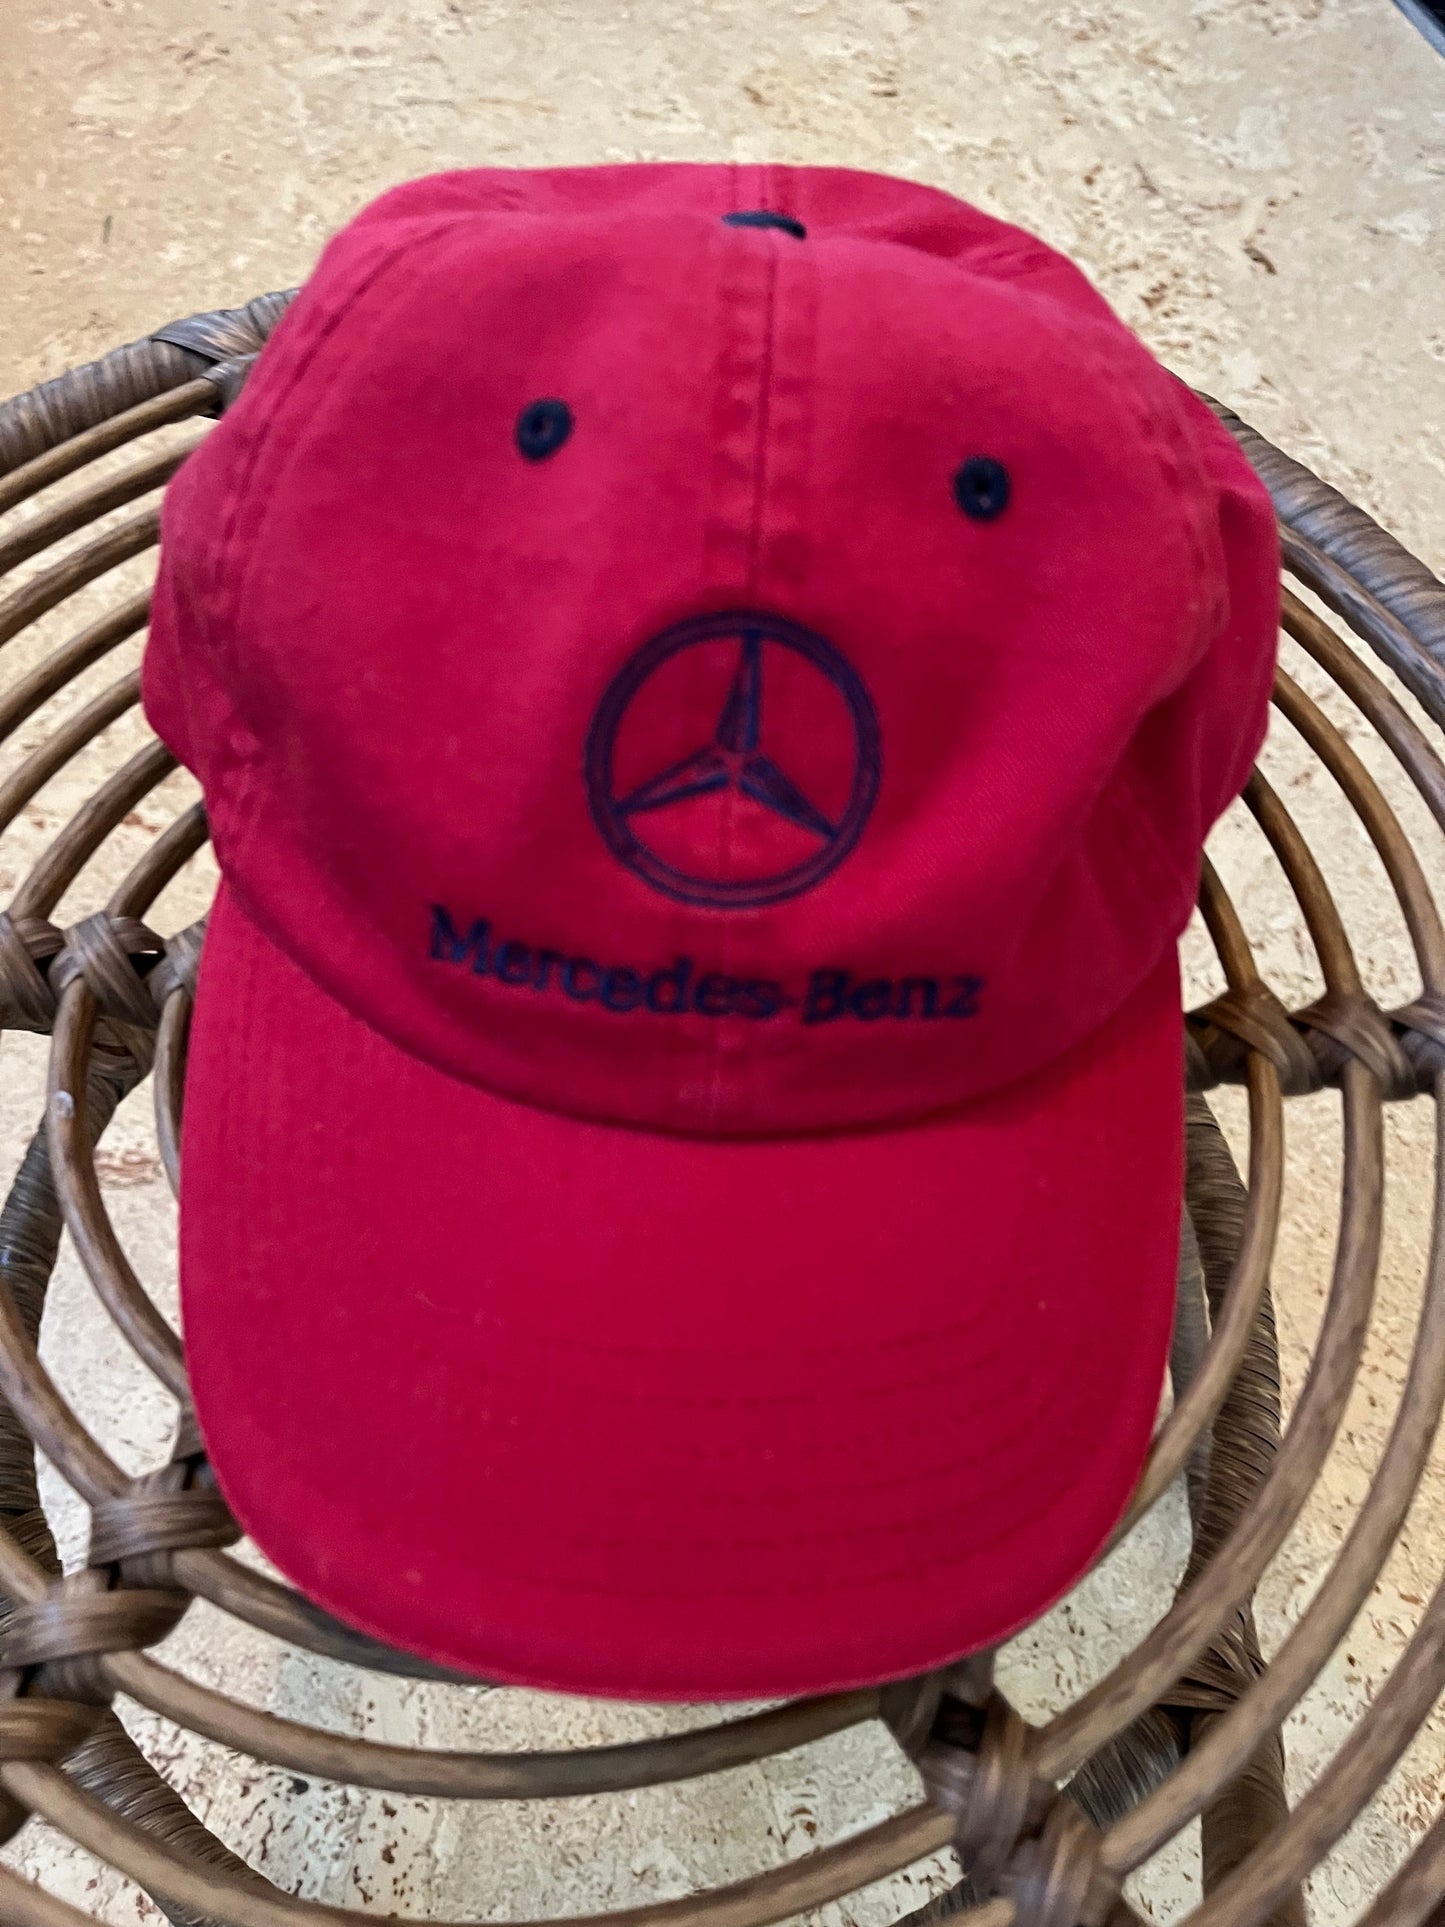 2002 Mercedes Benz Hat